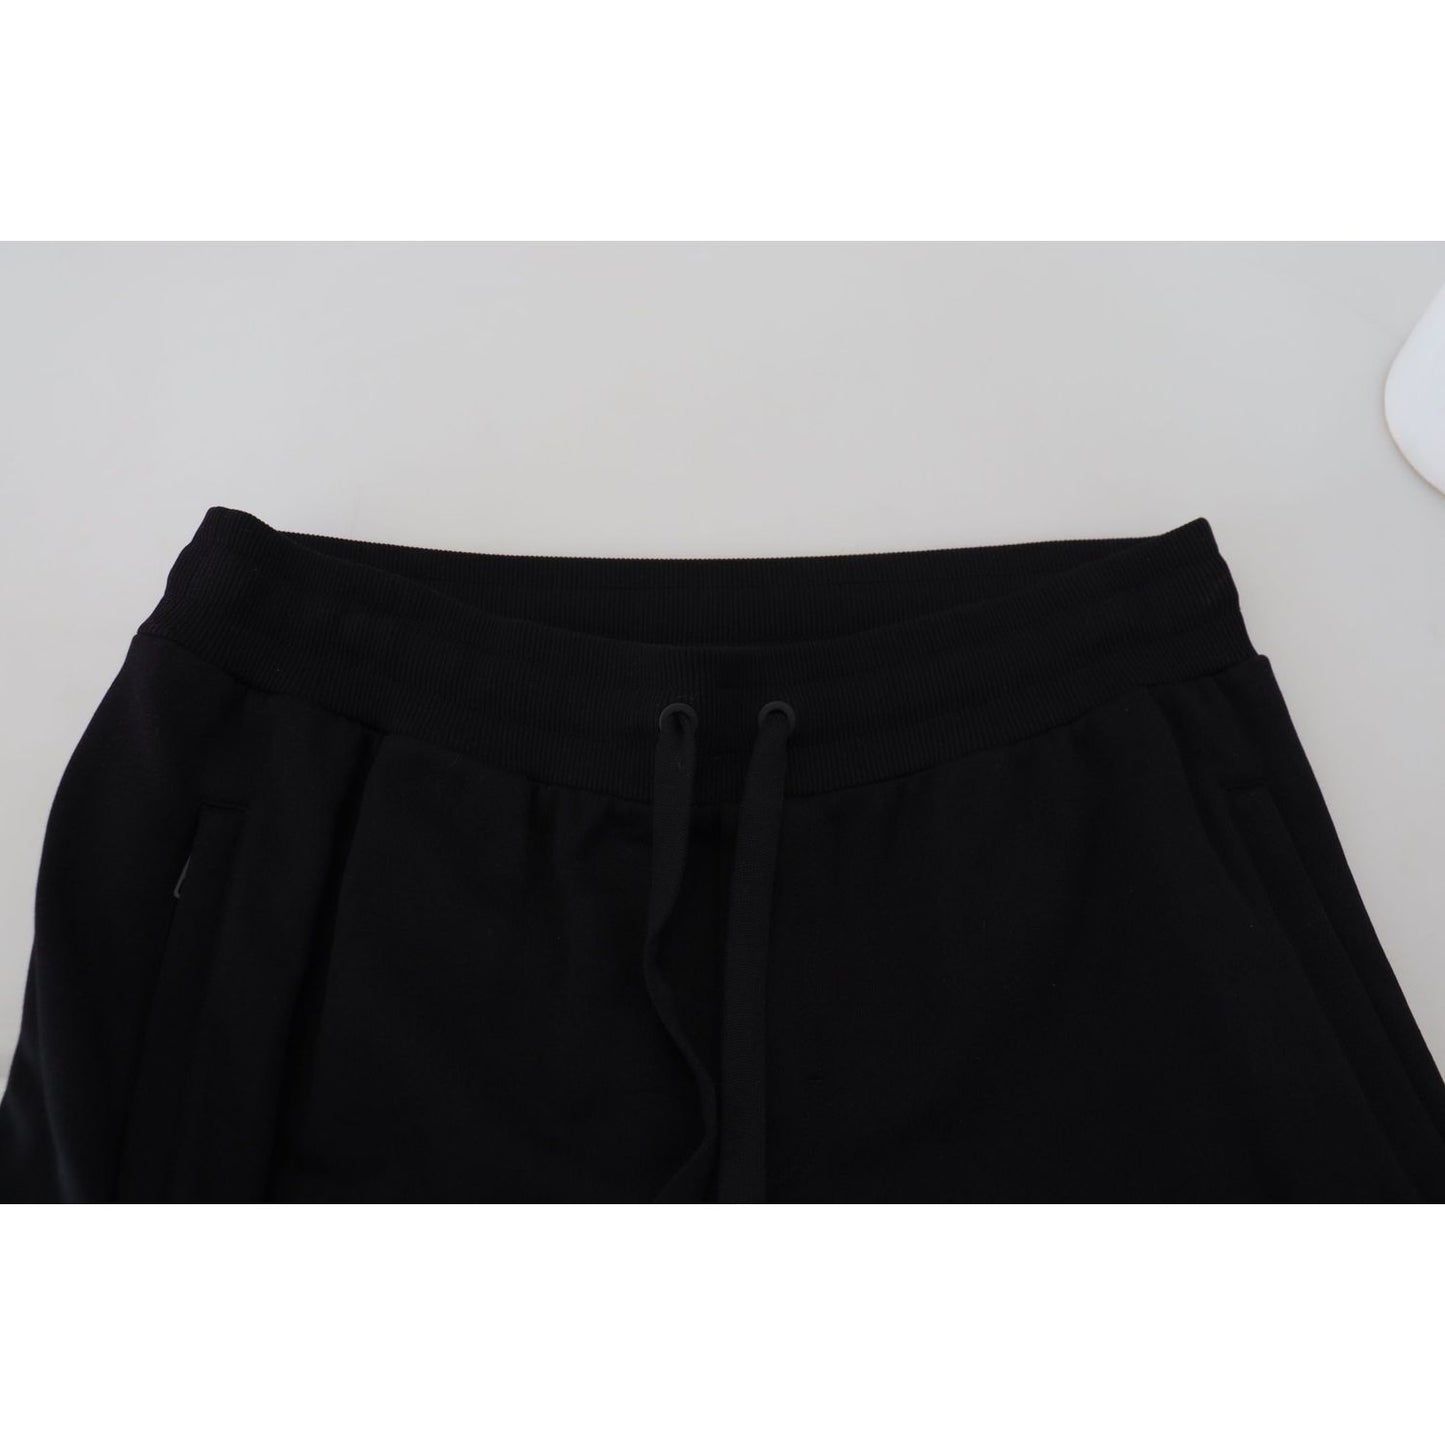 Dolce & Gabbana Elegant Black Cotton Jogger Pants black-cotton-men-jogger-pants